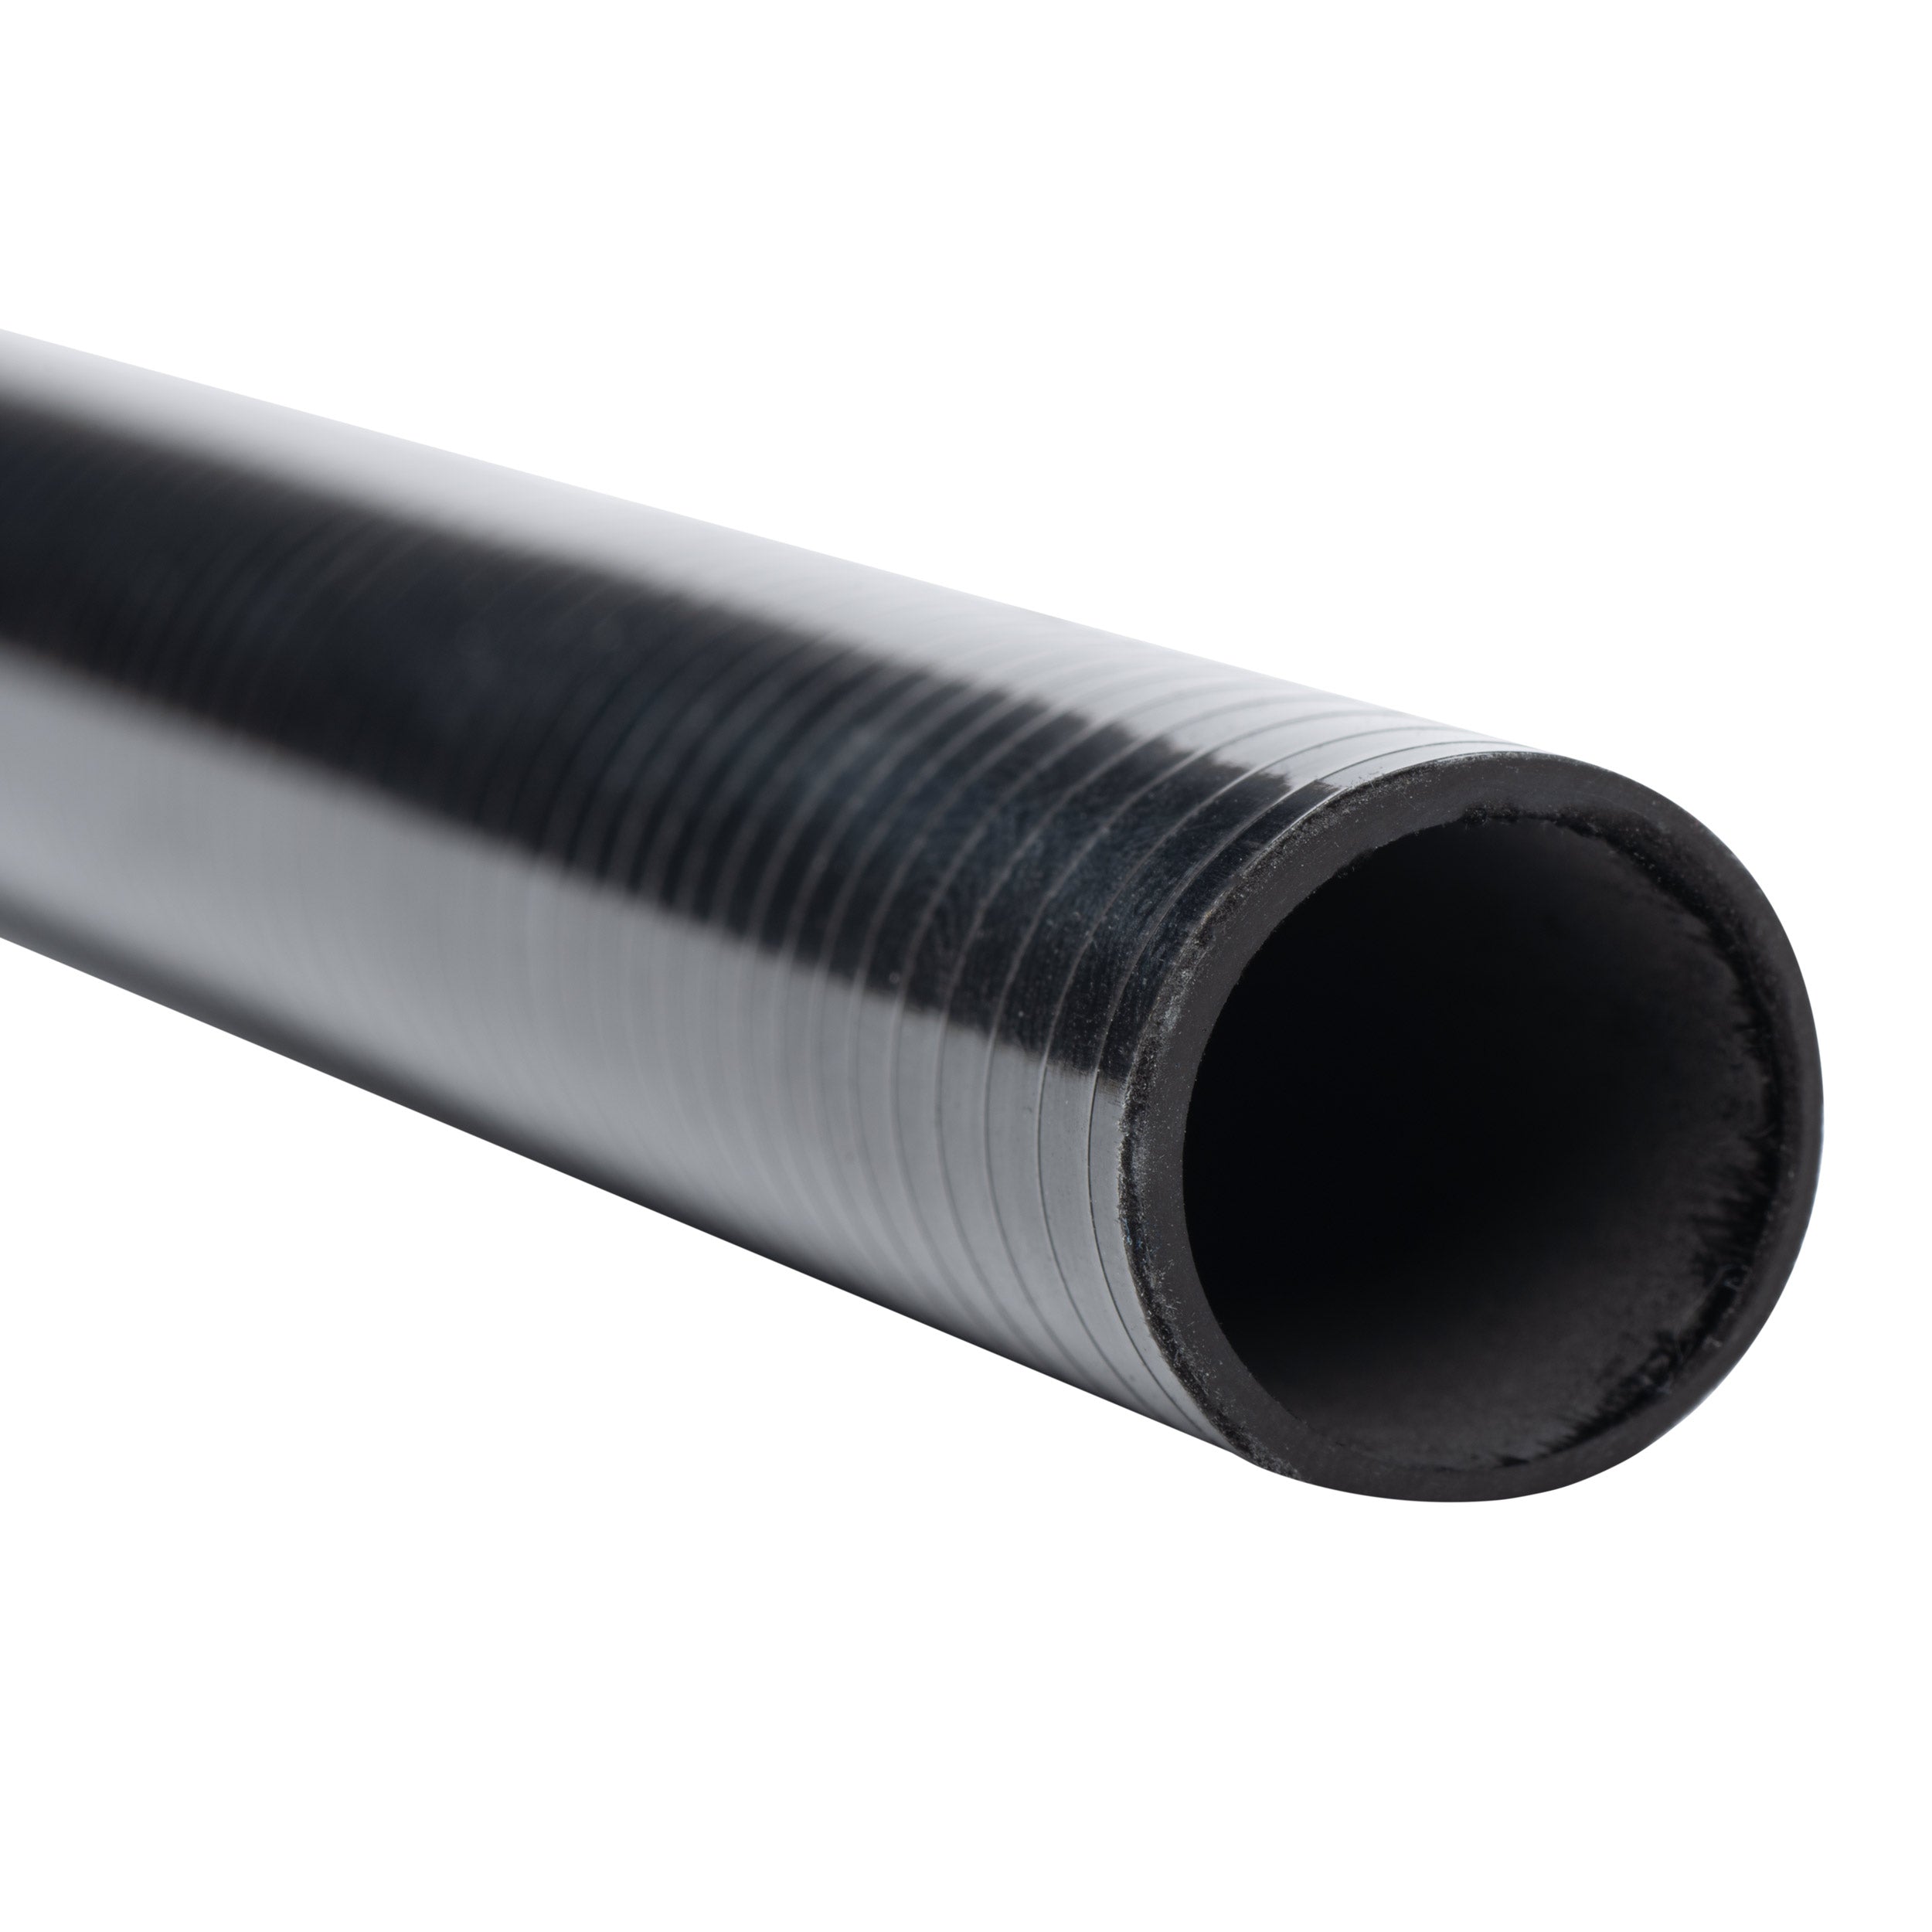 Cashion CR6r Carbon Fiber Popping Rod Blank - CR6r-iP902